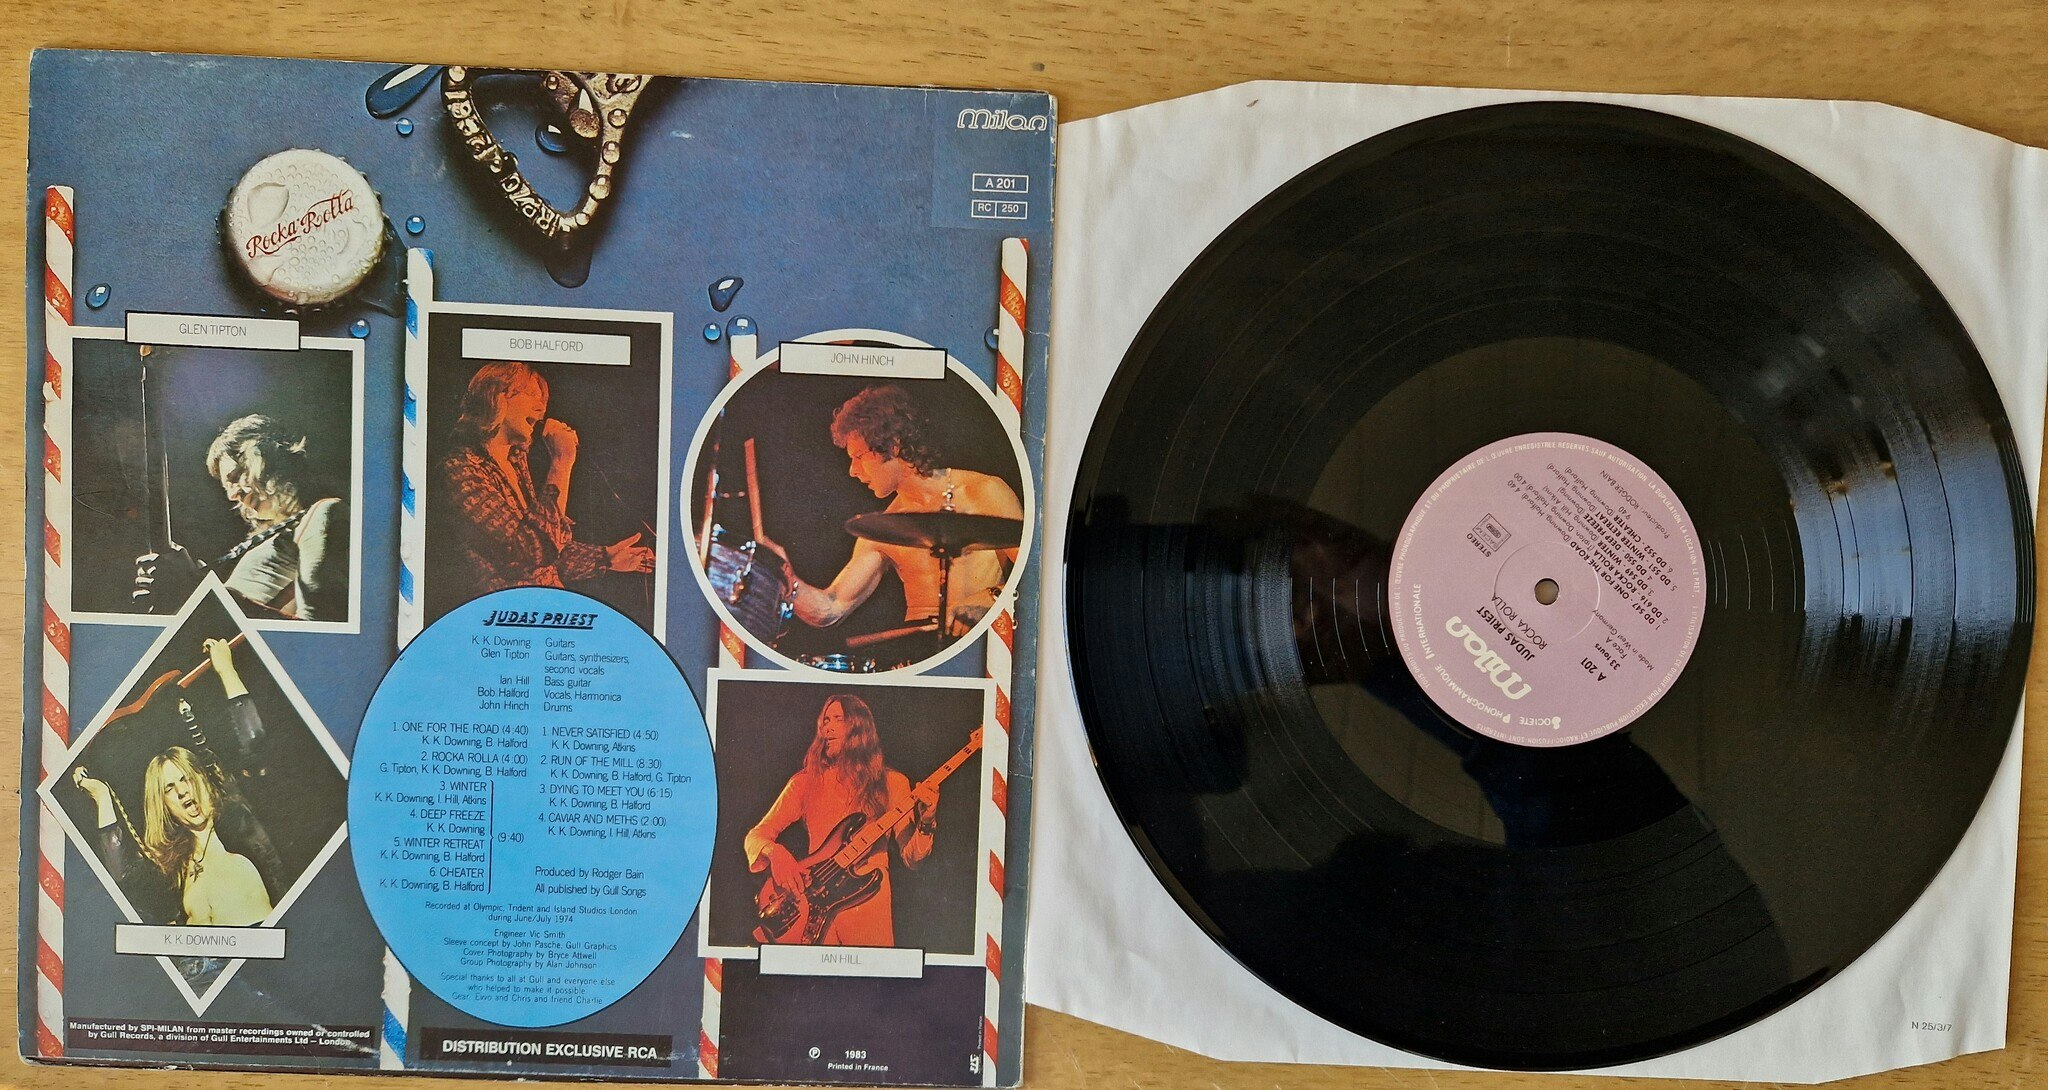 Judas Priest, Rocka rolla. Vinyl LP